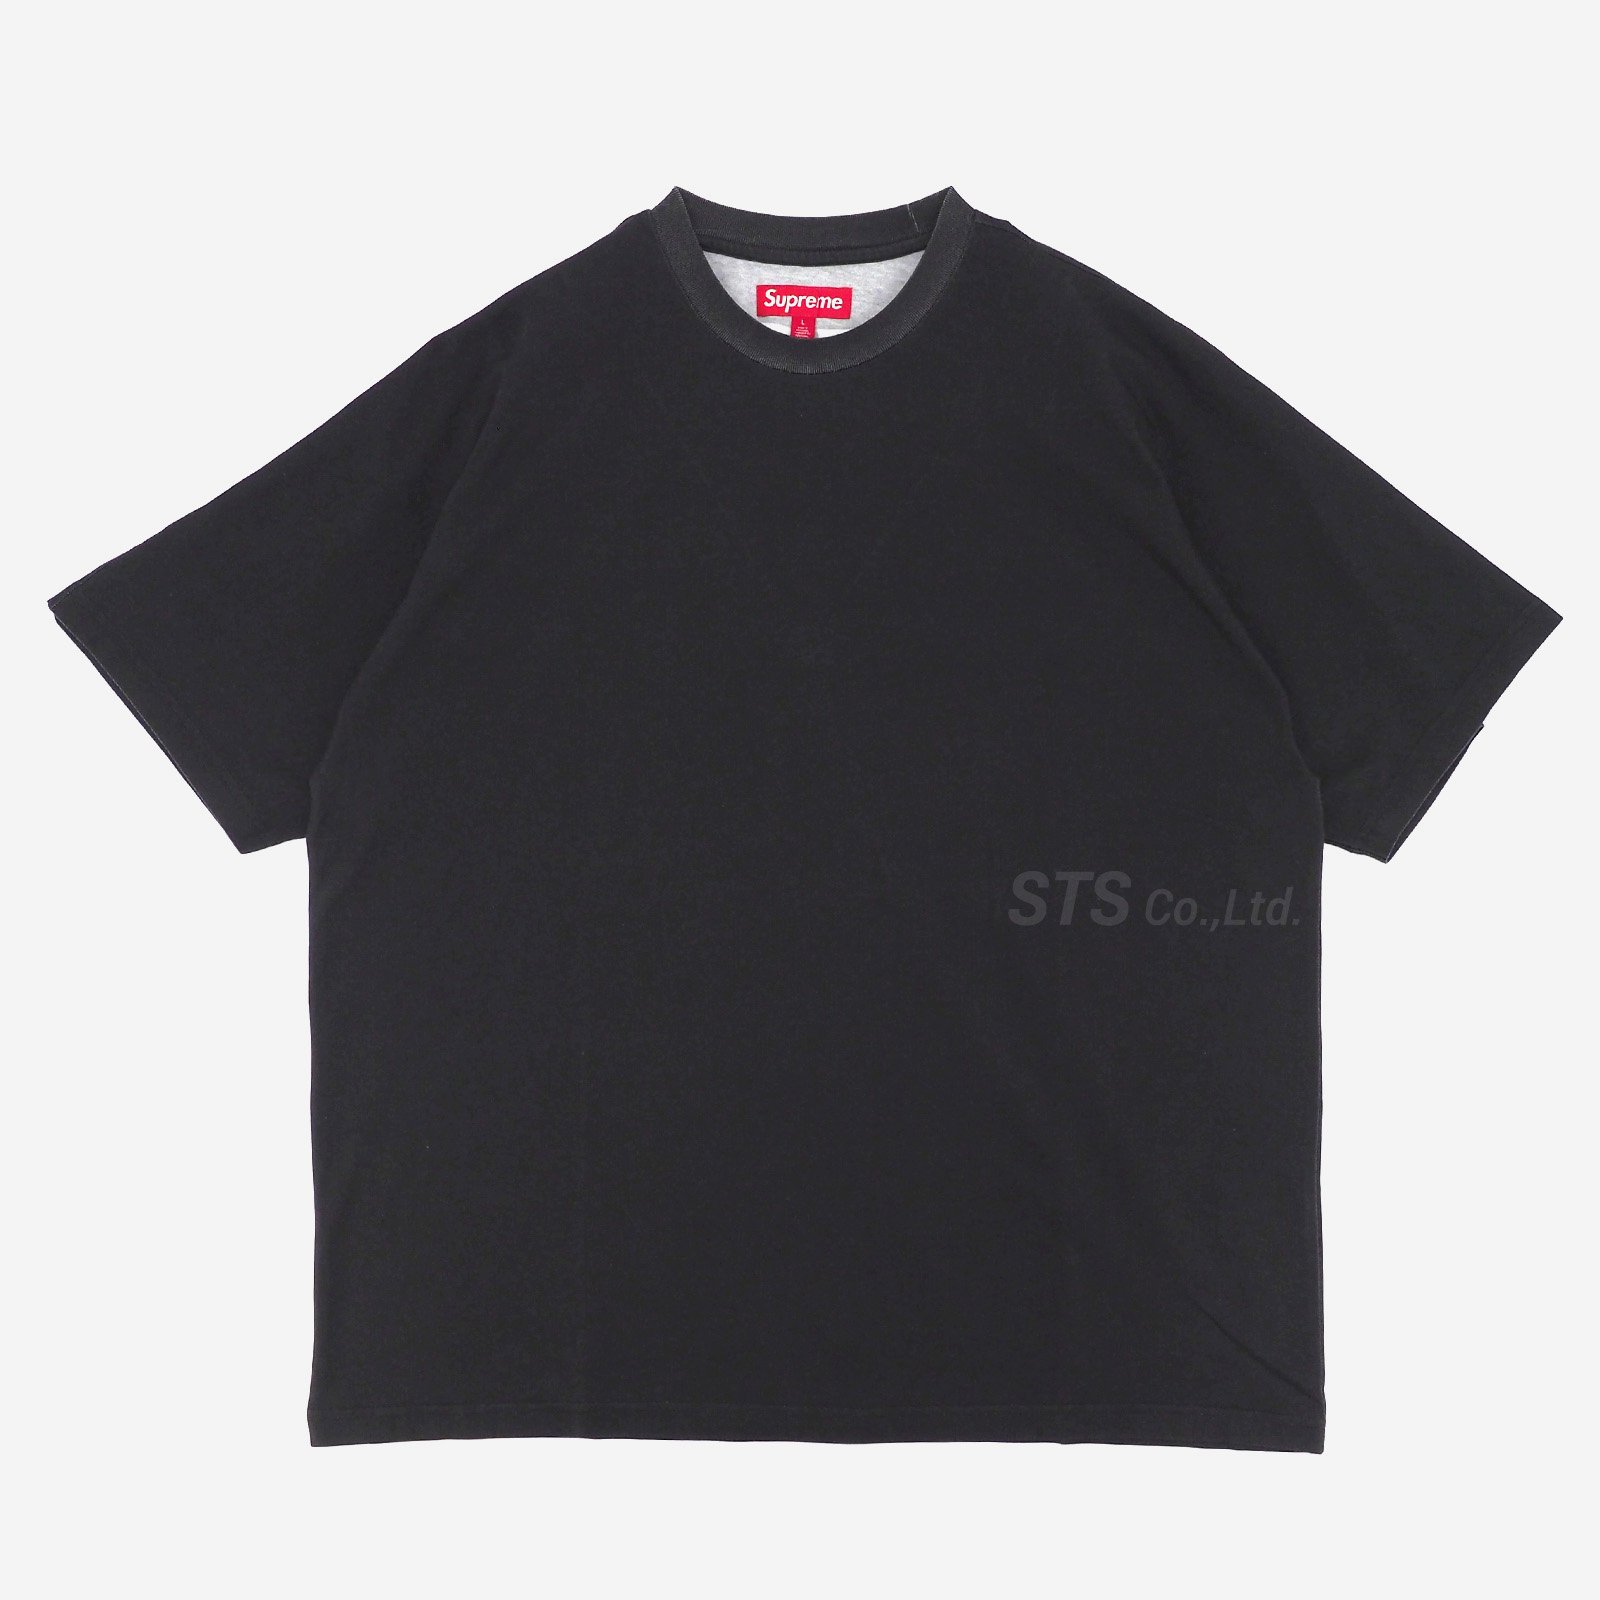 Supreme Split S/S Top Black XLargeたくやのTシャツ - トップス